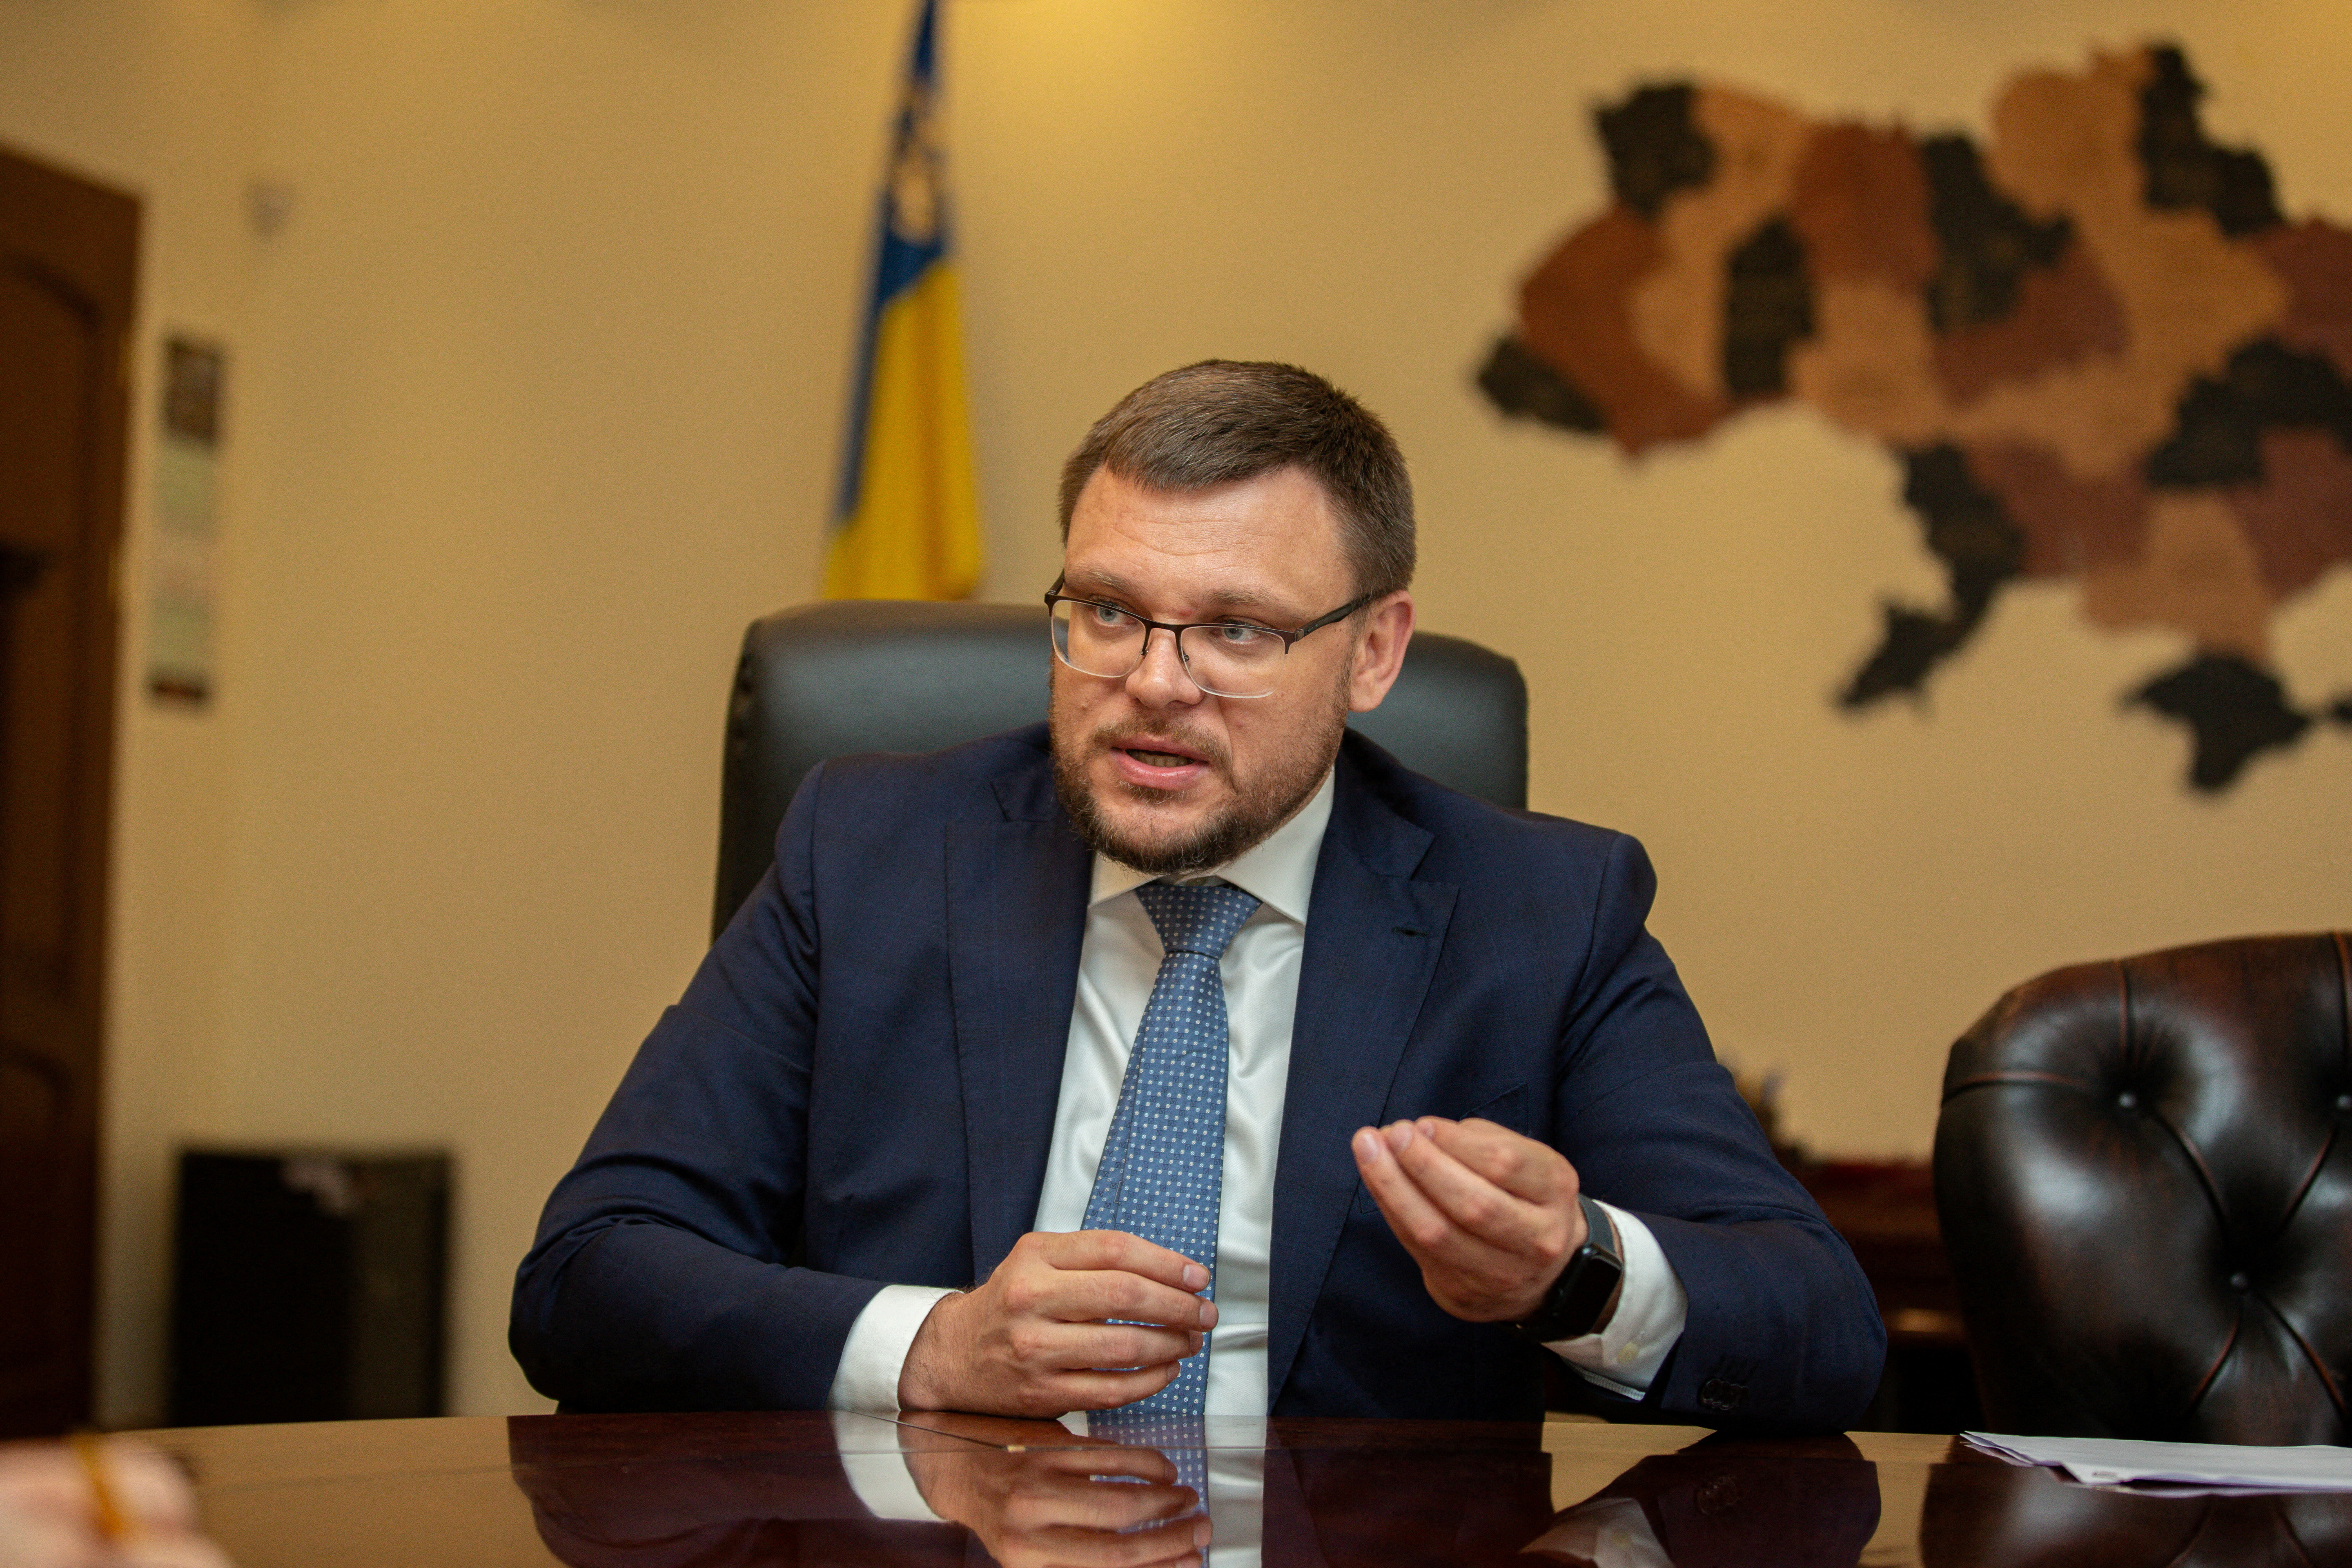 Semen Kryvonos, director of the National Anti-Corruption Bureau of Ukraine, speaks with Reuters in Kyiv